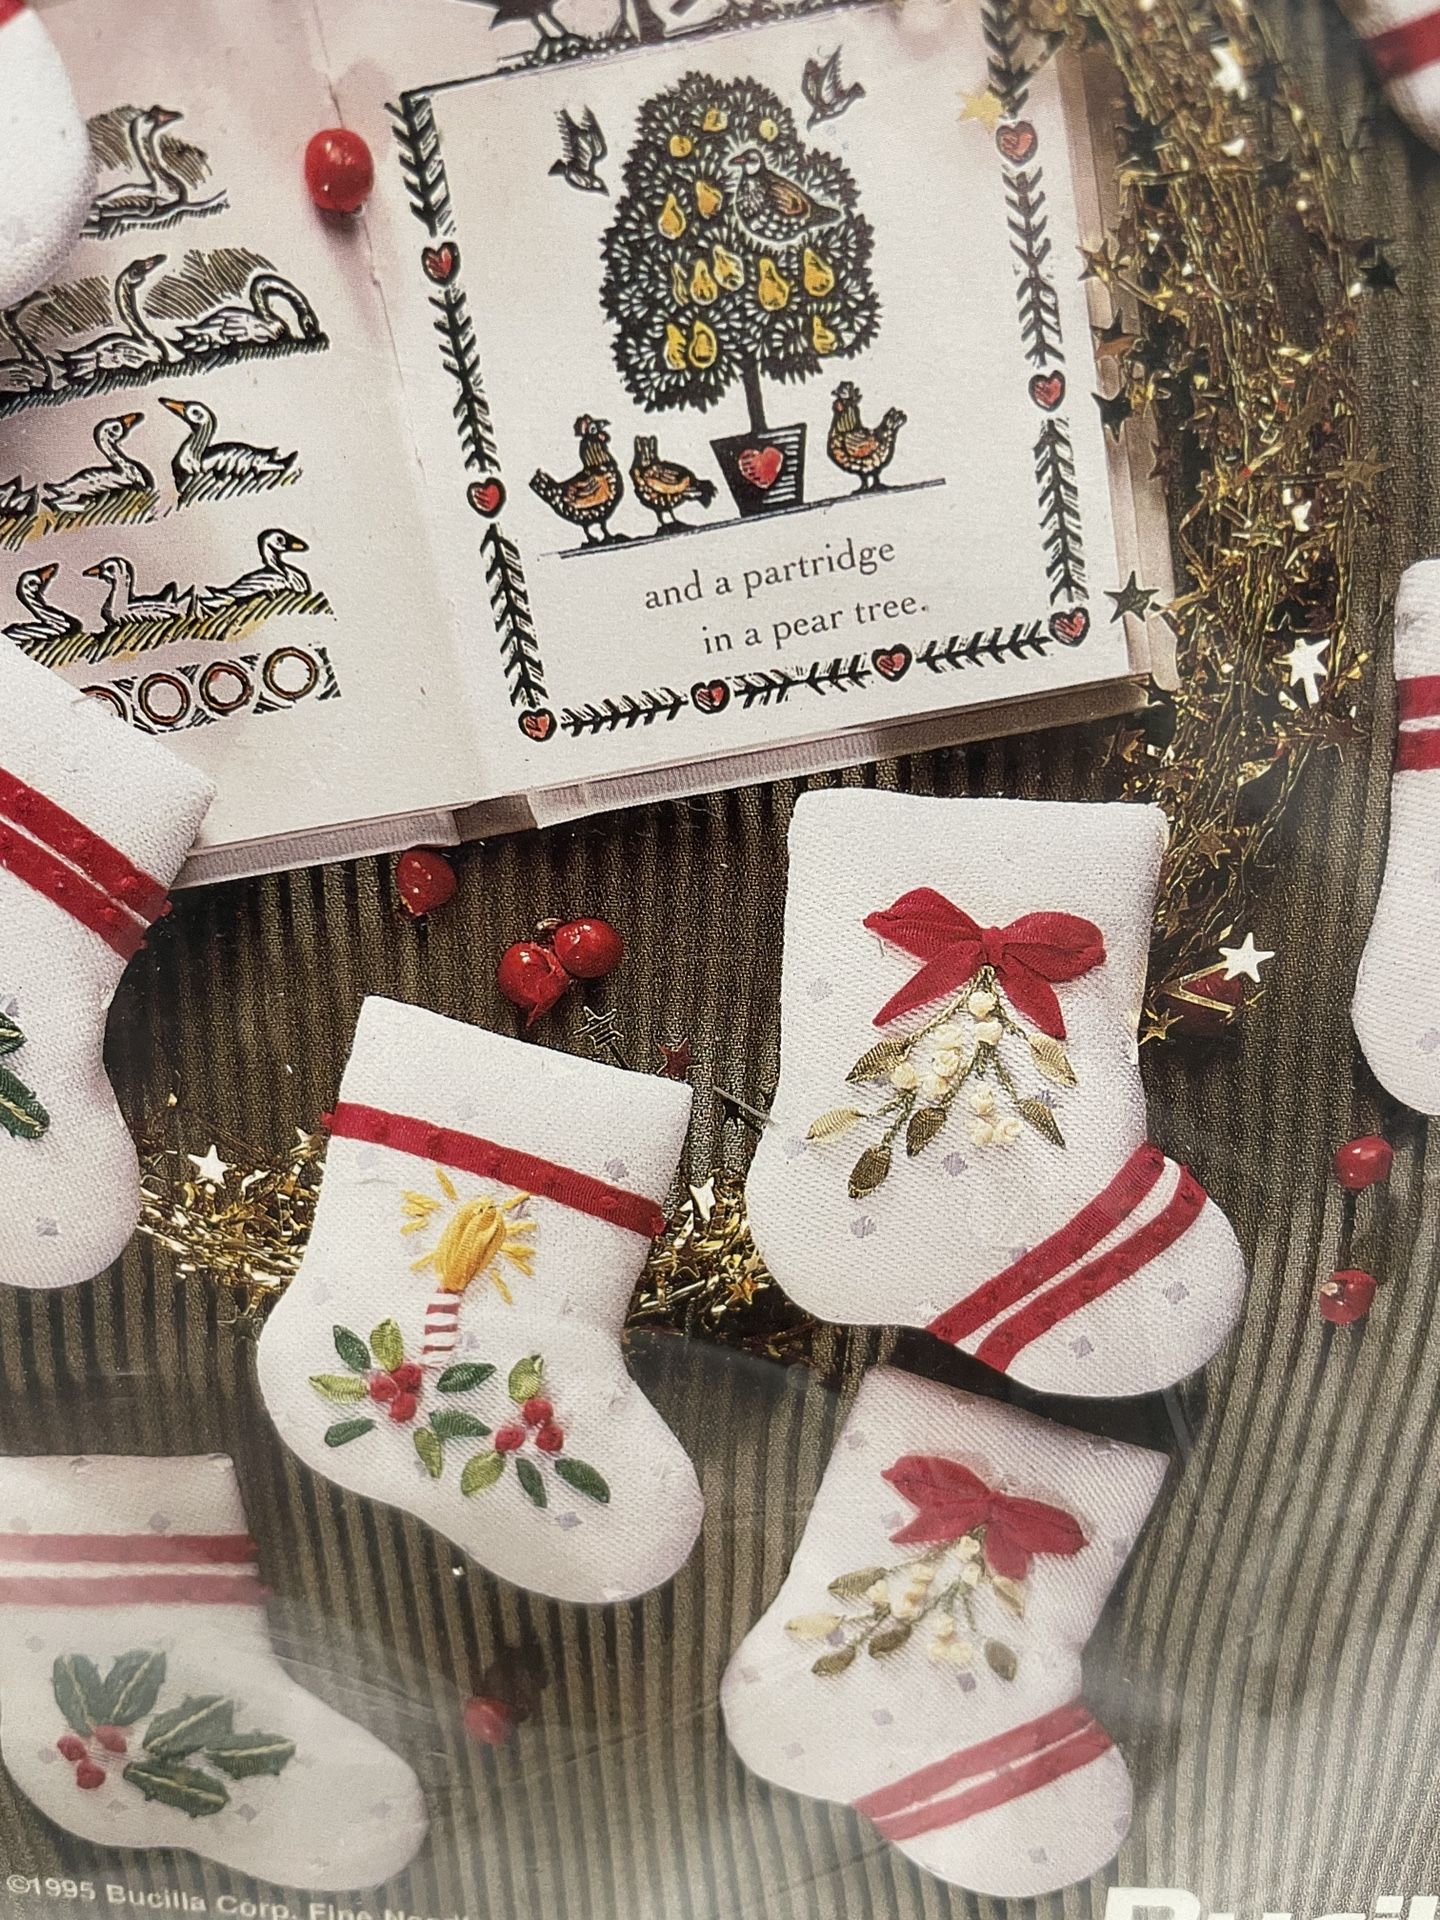 (2) Unopened vintage Bucilla embroidery ornaments kits